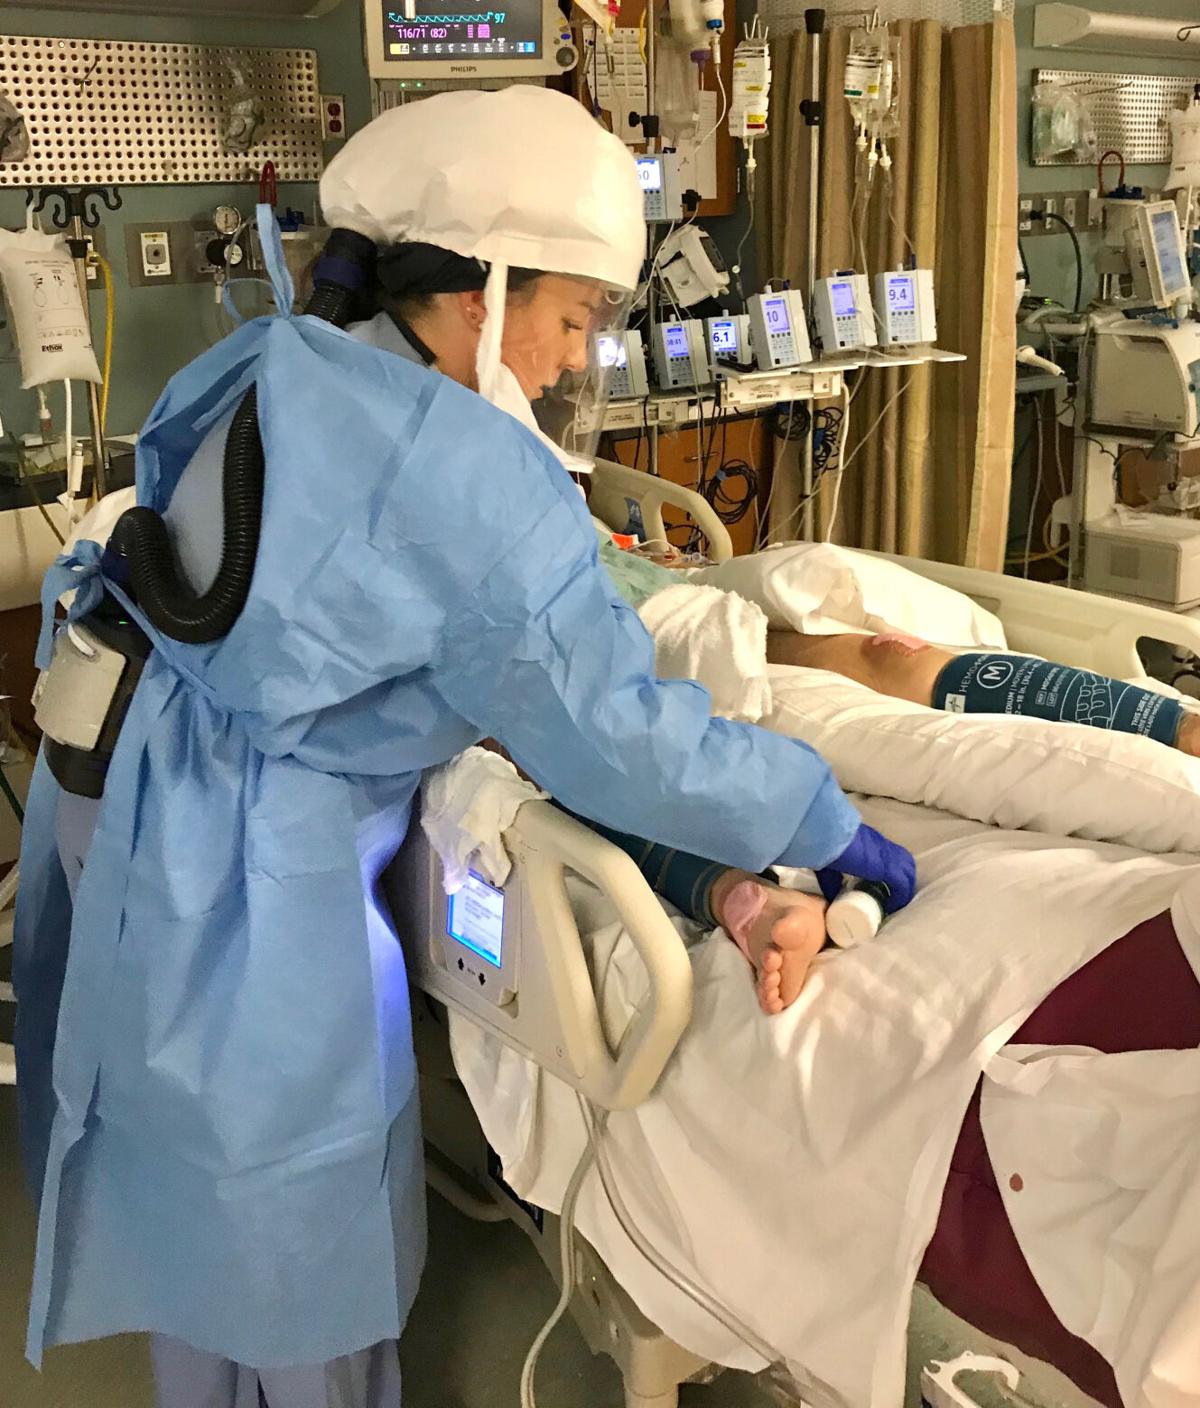 Ali Iavagnilio, a registered nurse at Memorial Hospital, treats a COVID-19 patient Wednesday inside one of the hospital’s coronavirus units. Provided photo